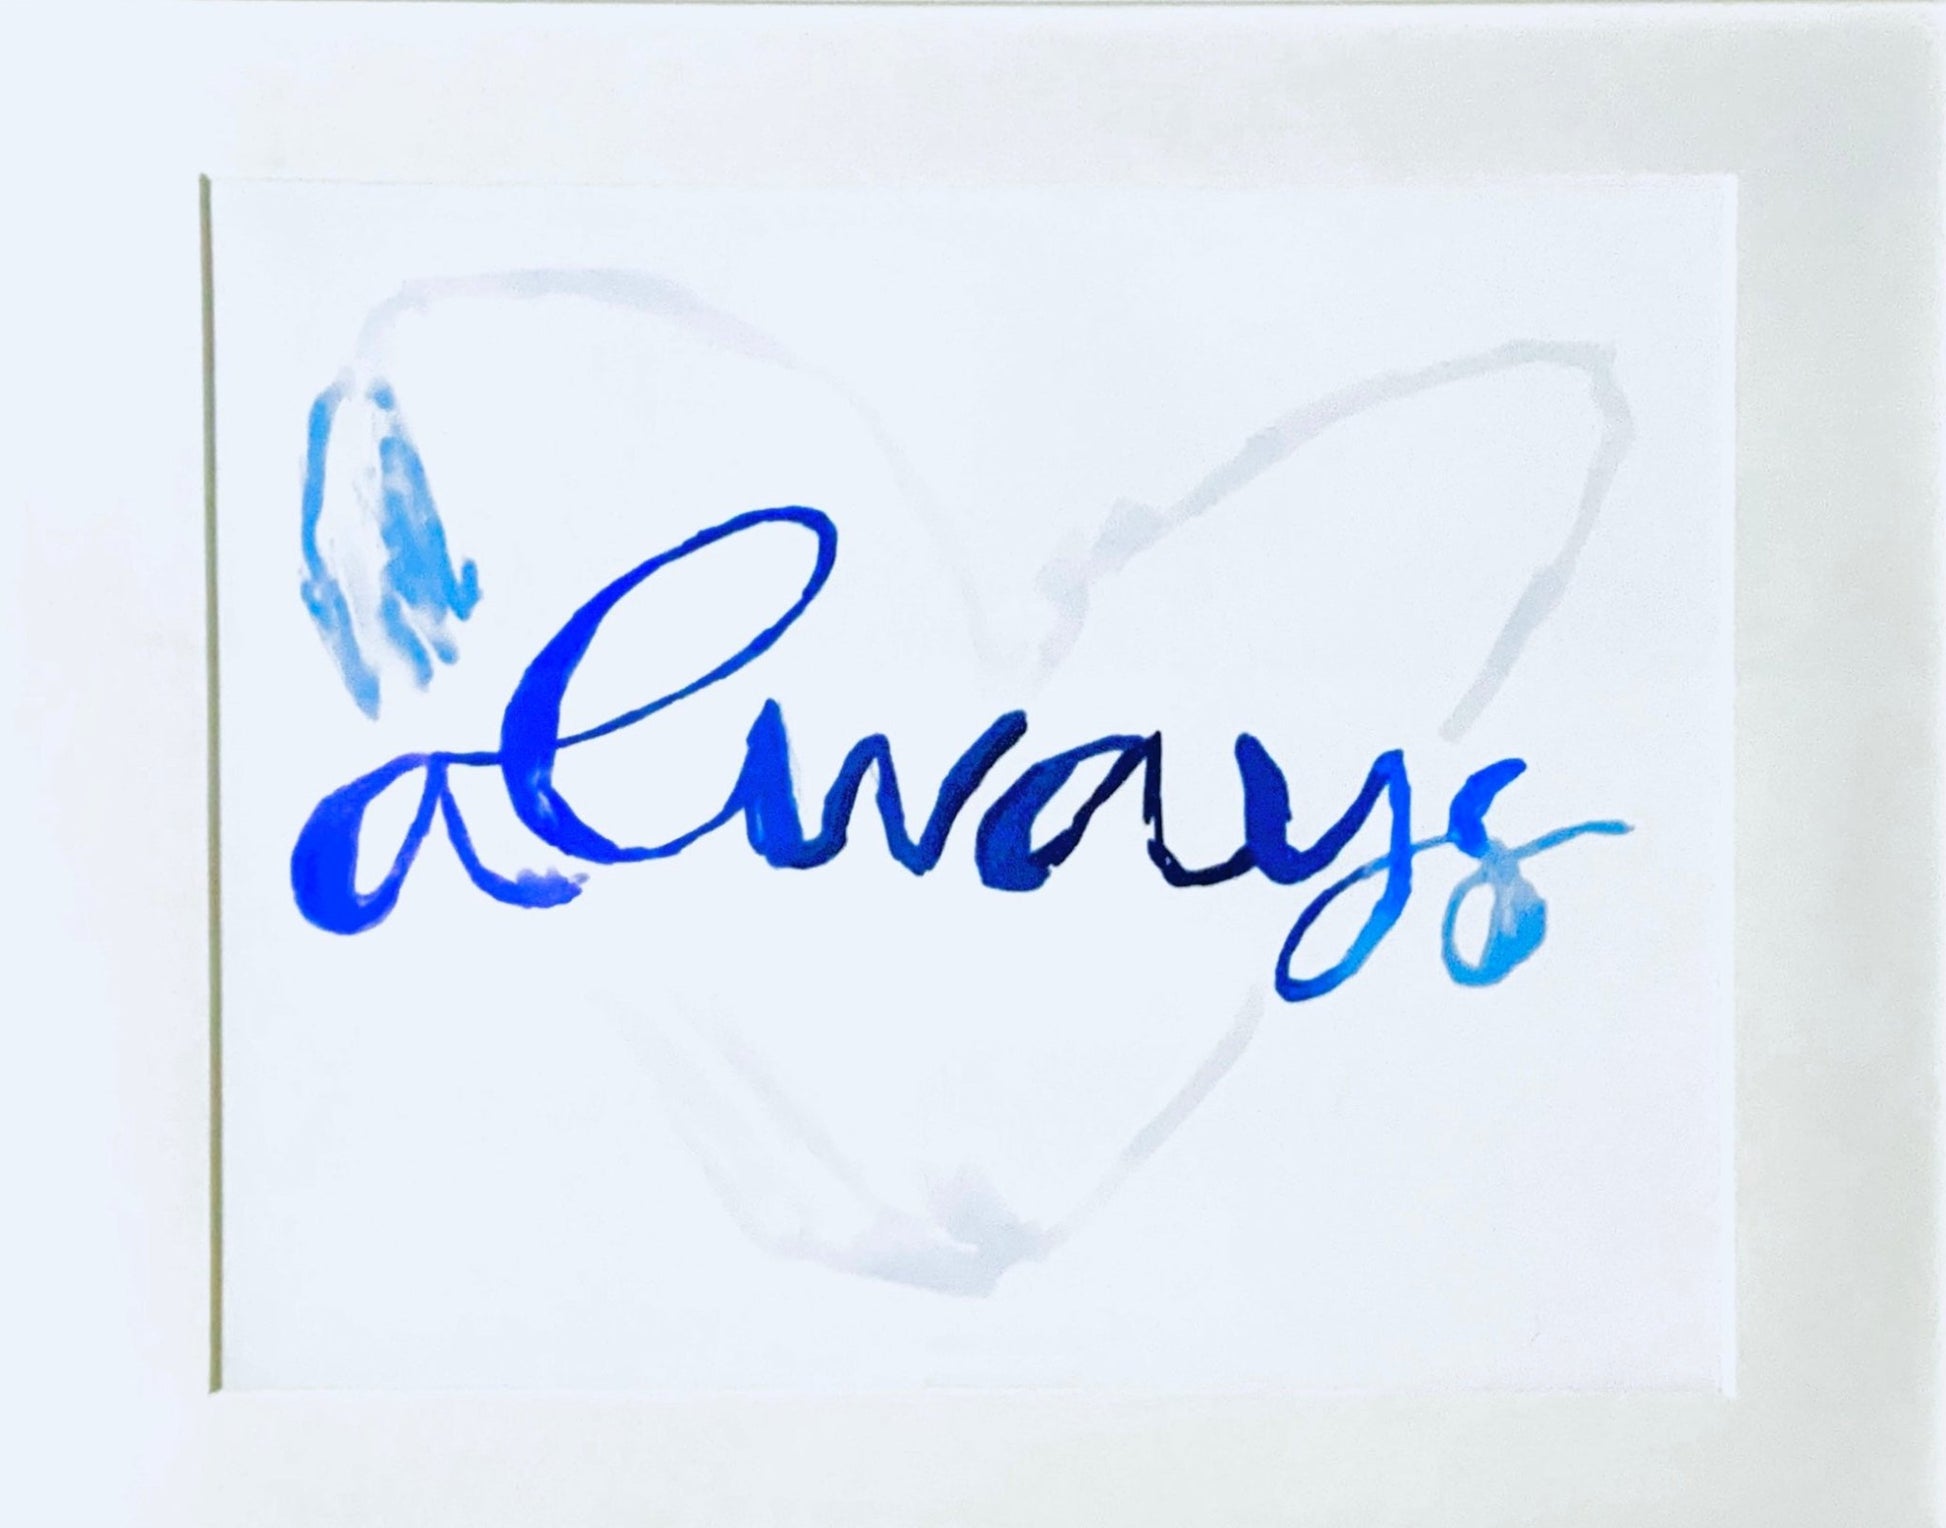 Always Heart Wall art - Blue Cava